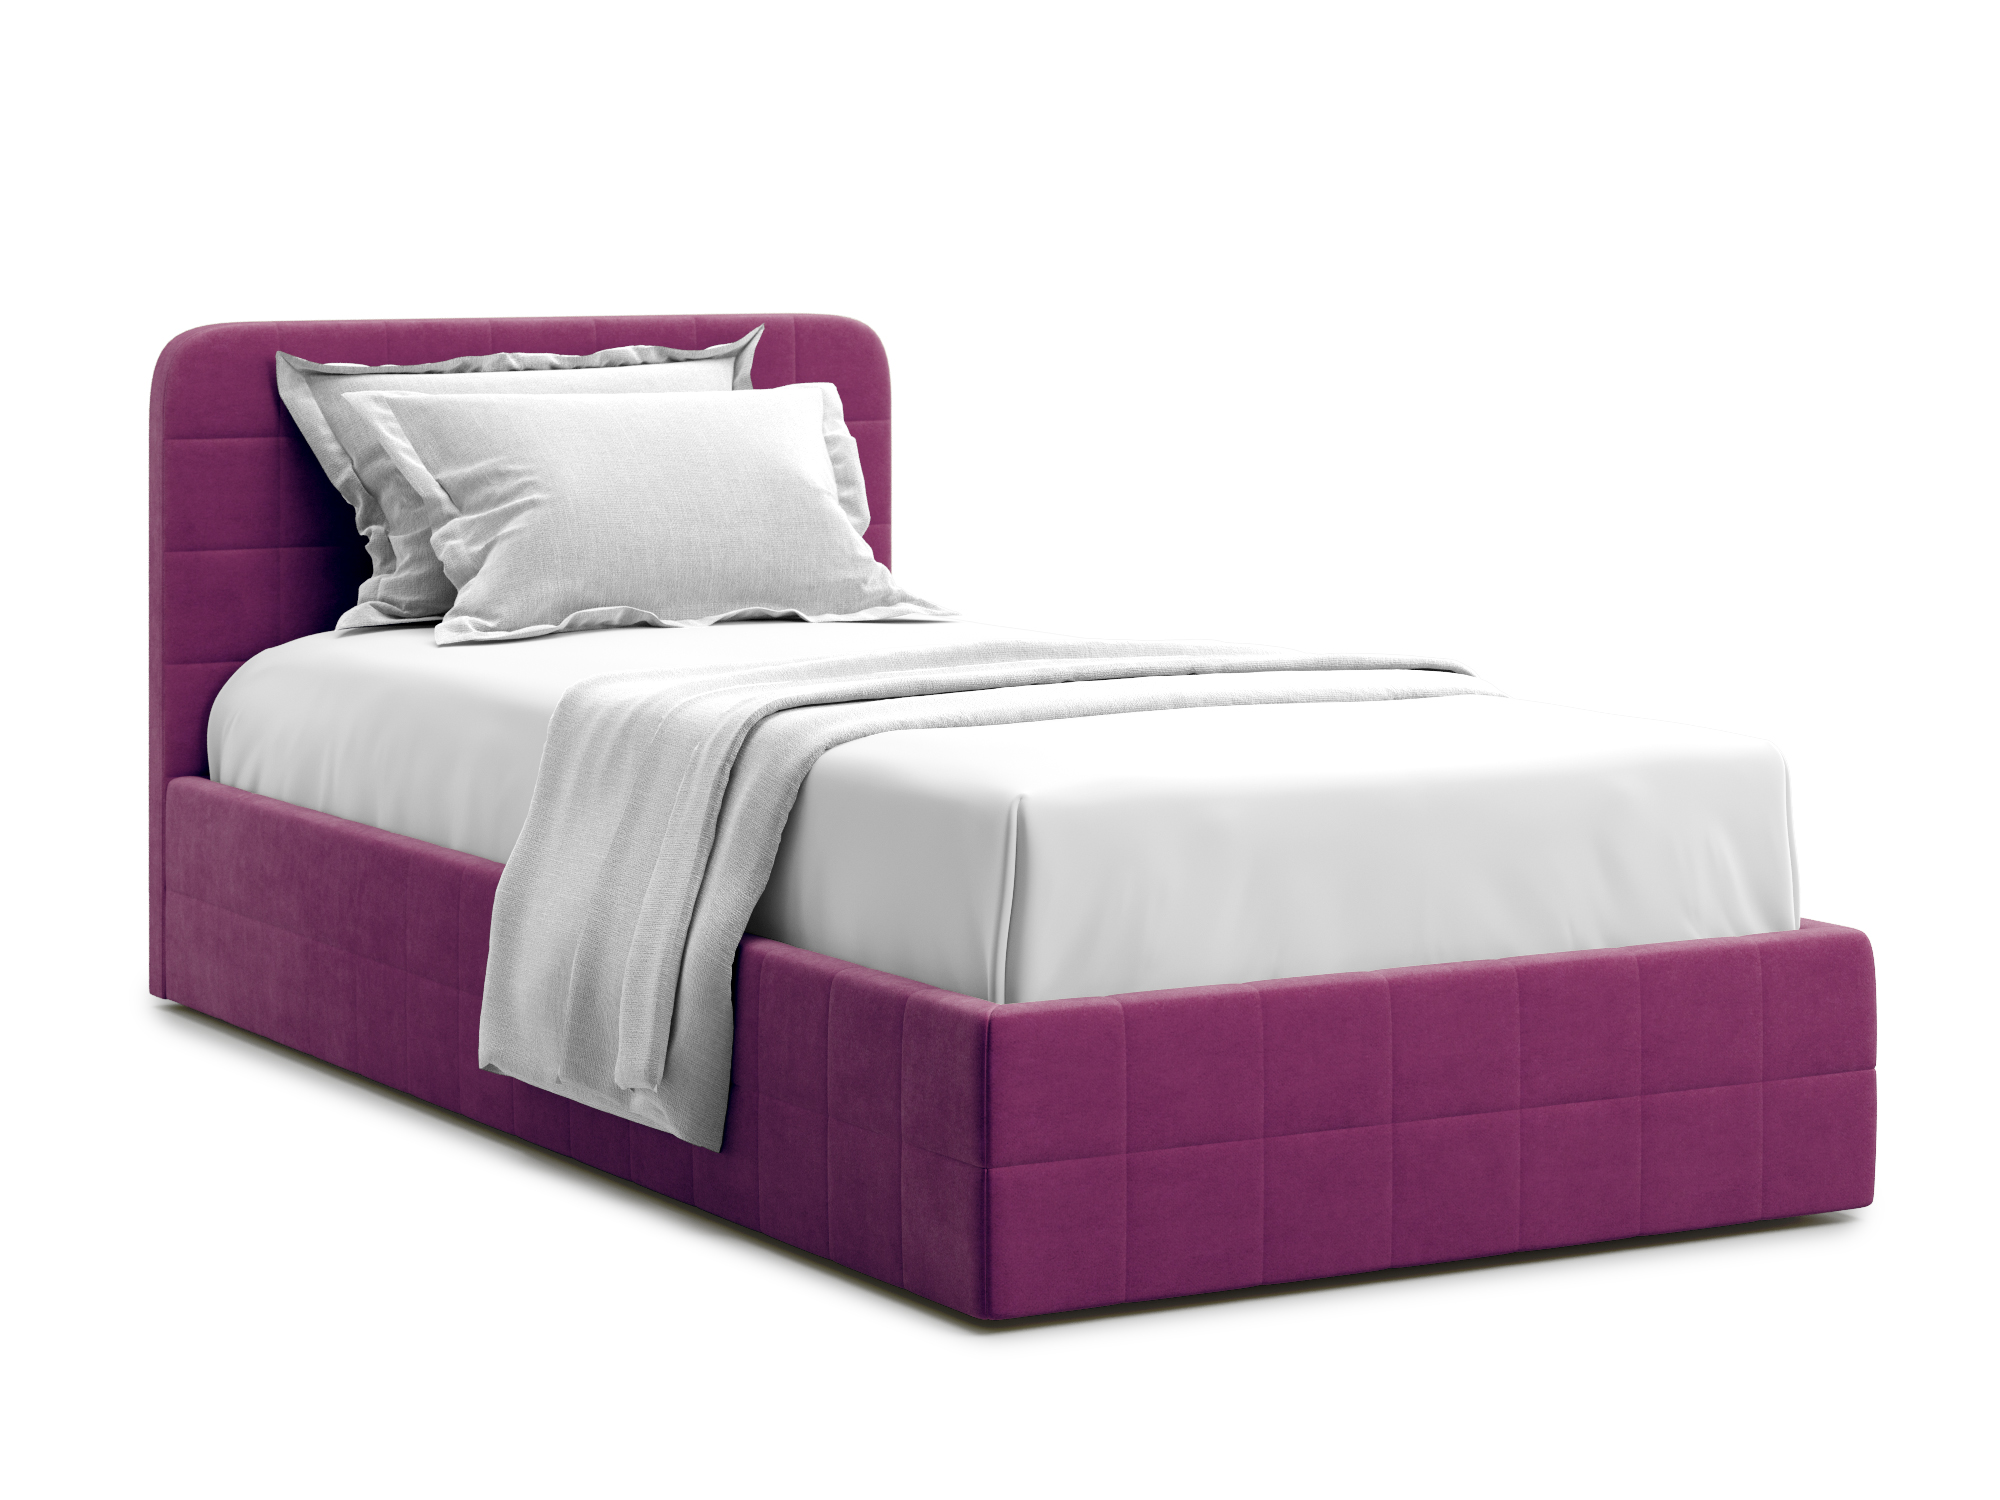 Кровать Adda 120 Velutto 15 Фиолетовый, Массив, ДСП кровать adda 90 velutto 22 коричневый массив дсп